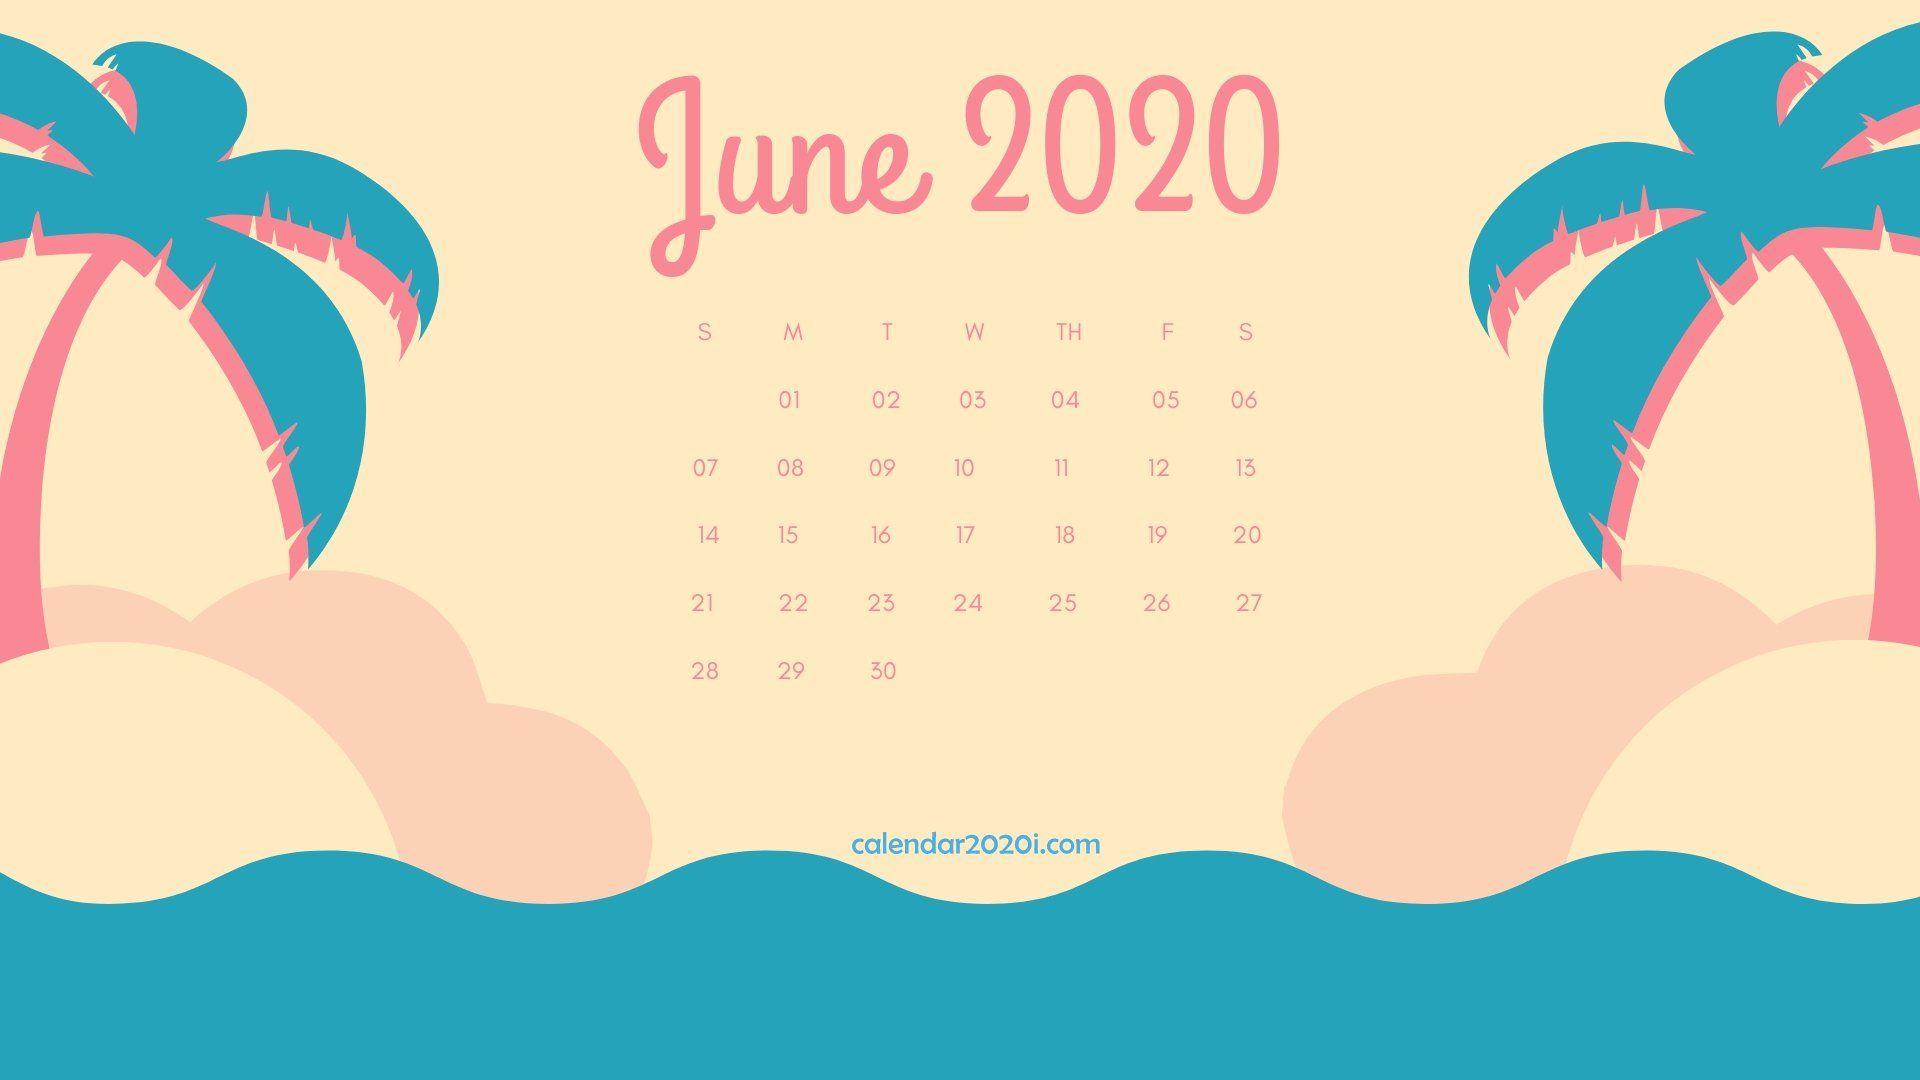 June 2020 Calendar Desktop Wallpaper. Calendar 2020 in 2019